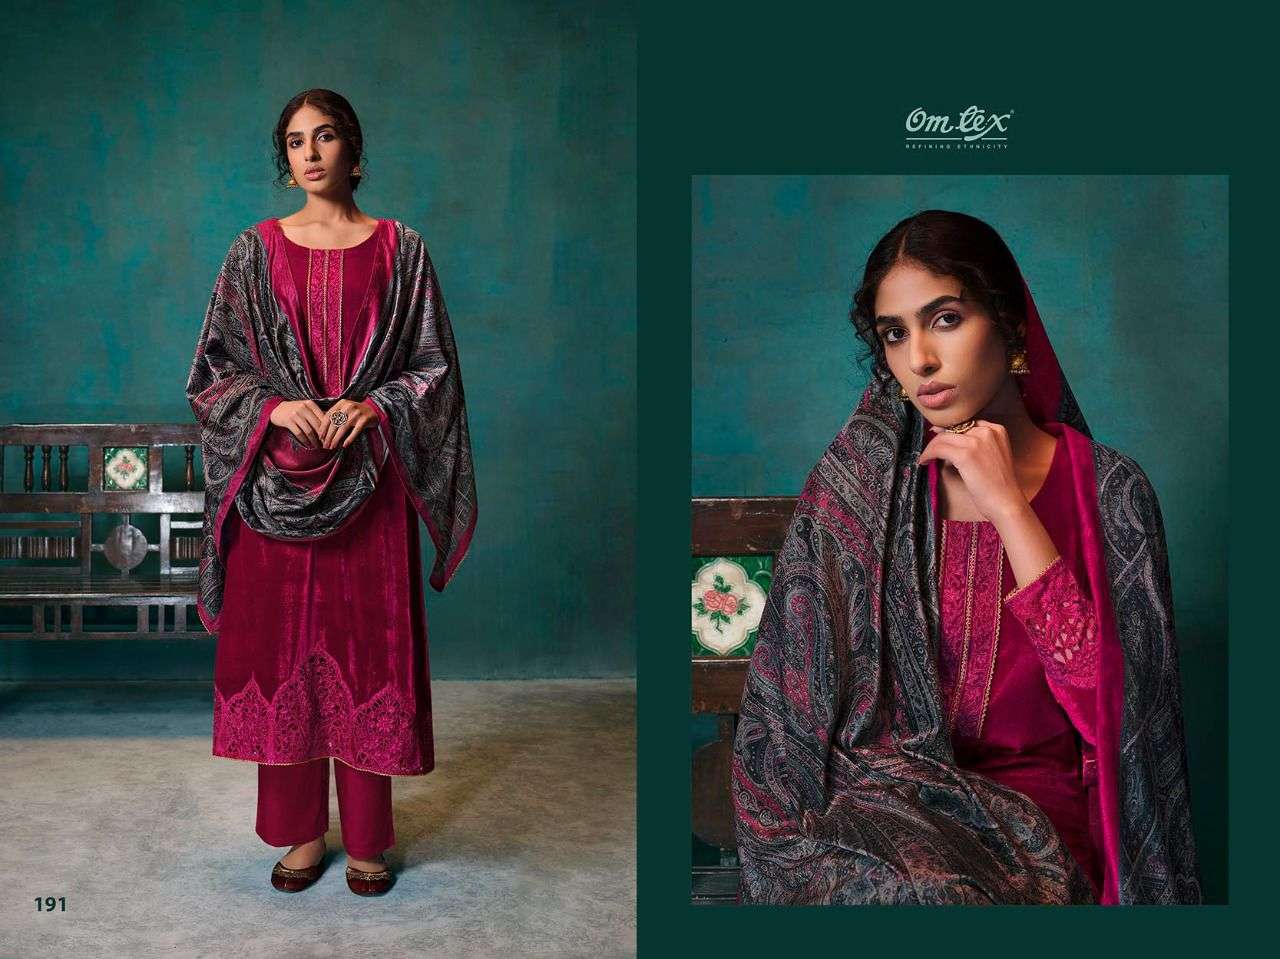 omtex kashika 191-194 series velvet embroidery work winter salwar kameez wholesale price surat